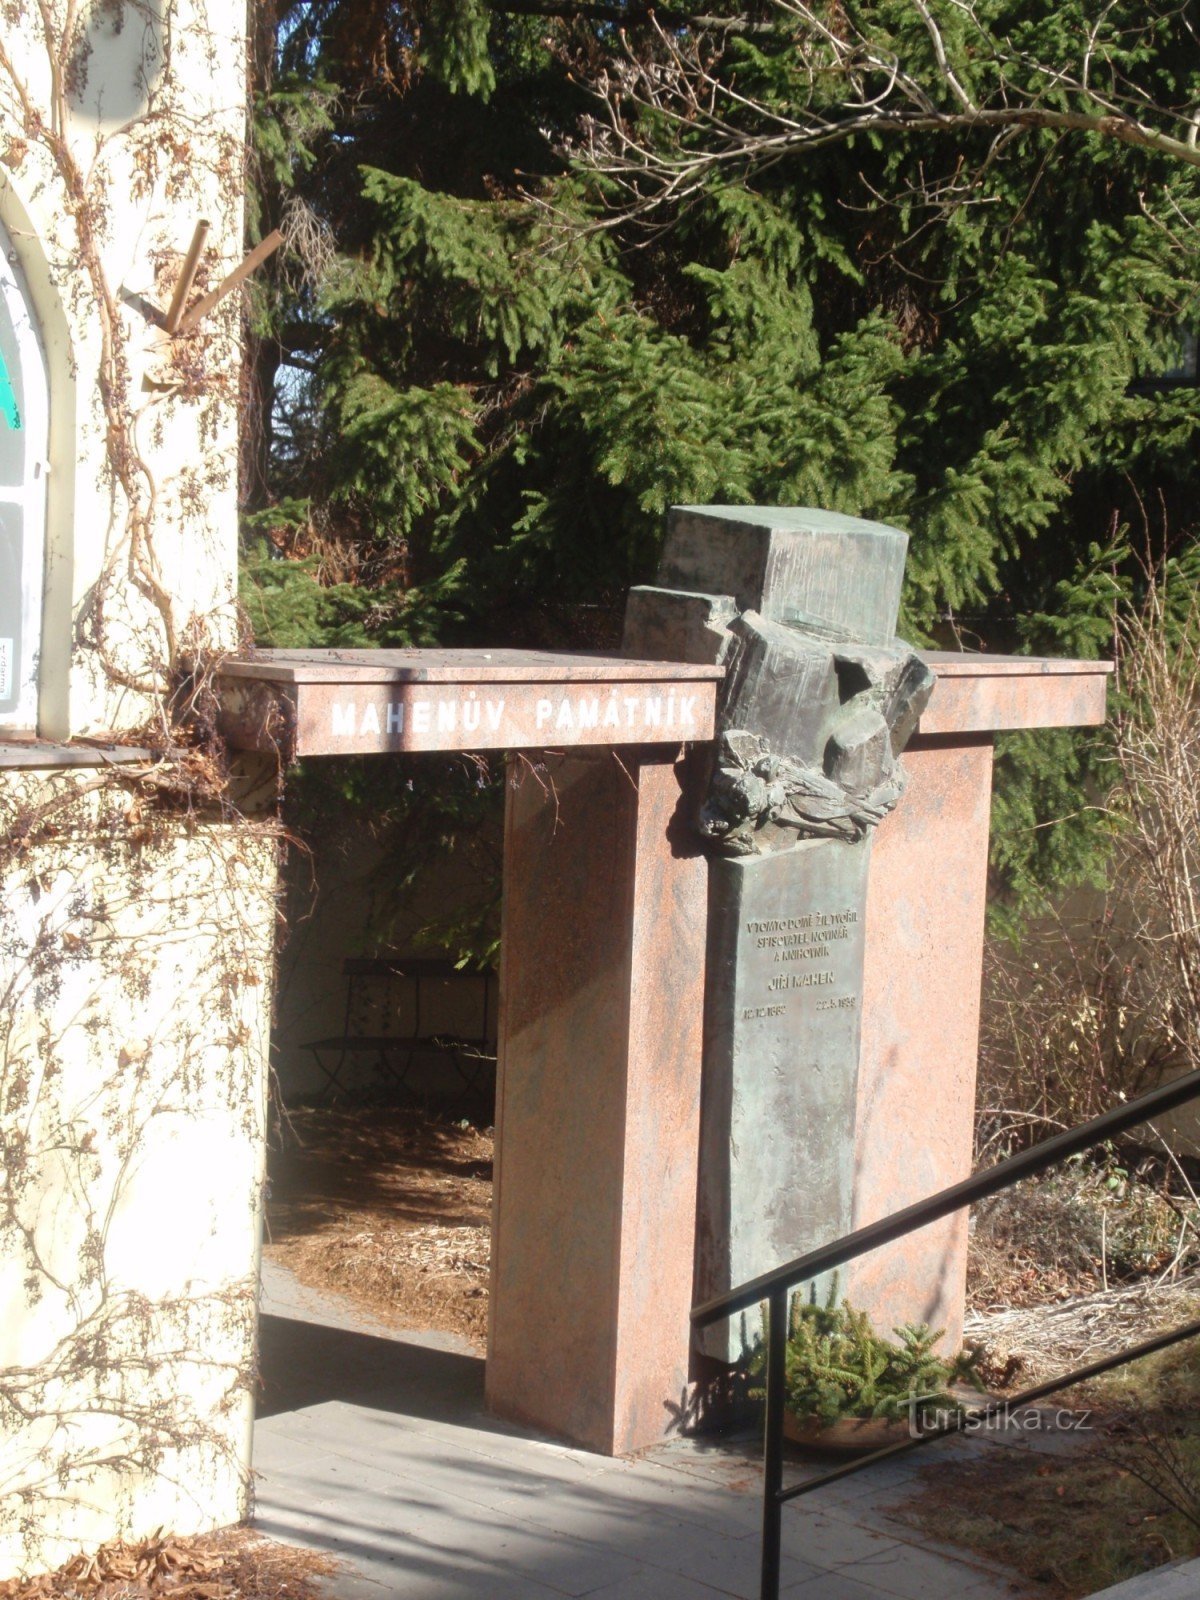 Mahen's monument, Brno